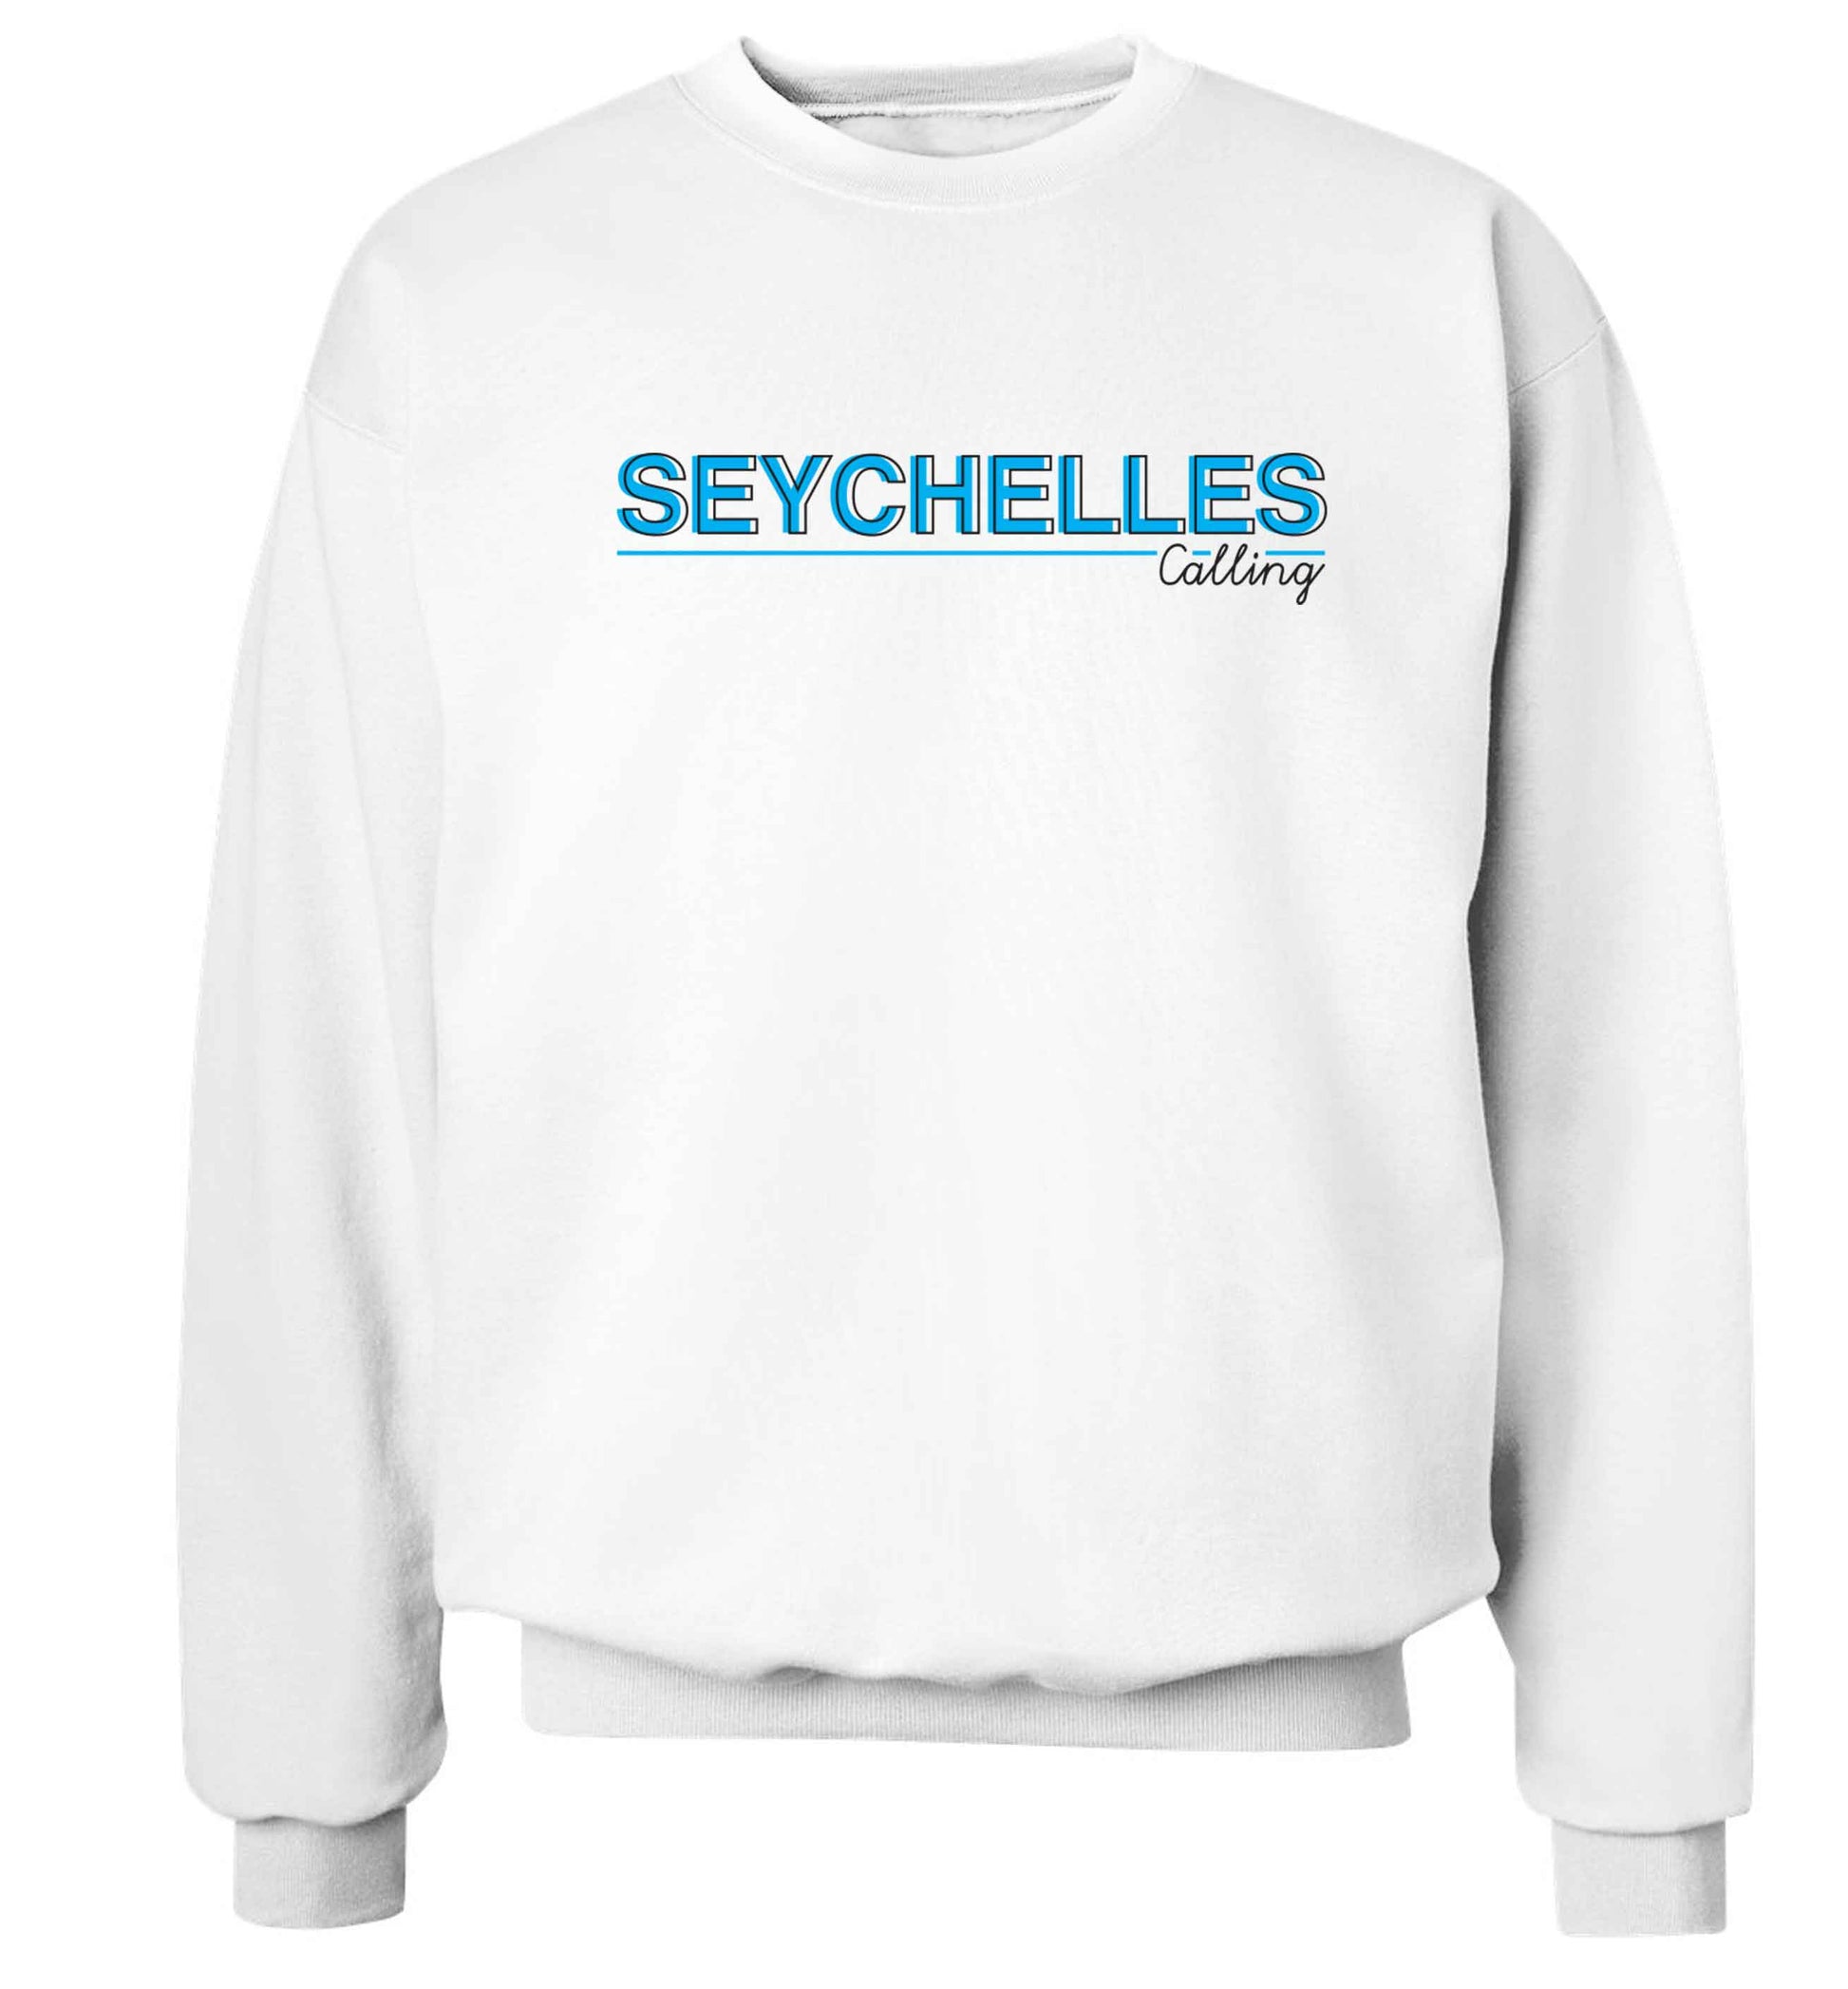 Seychelles calling Adult's unisex white Sweater 2XL